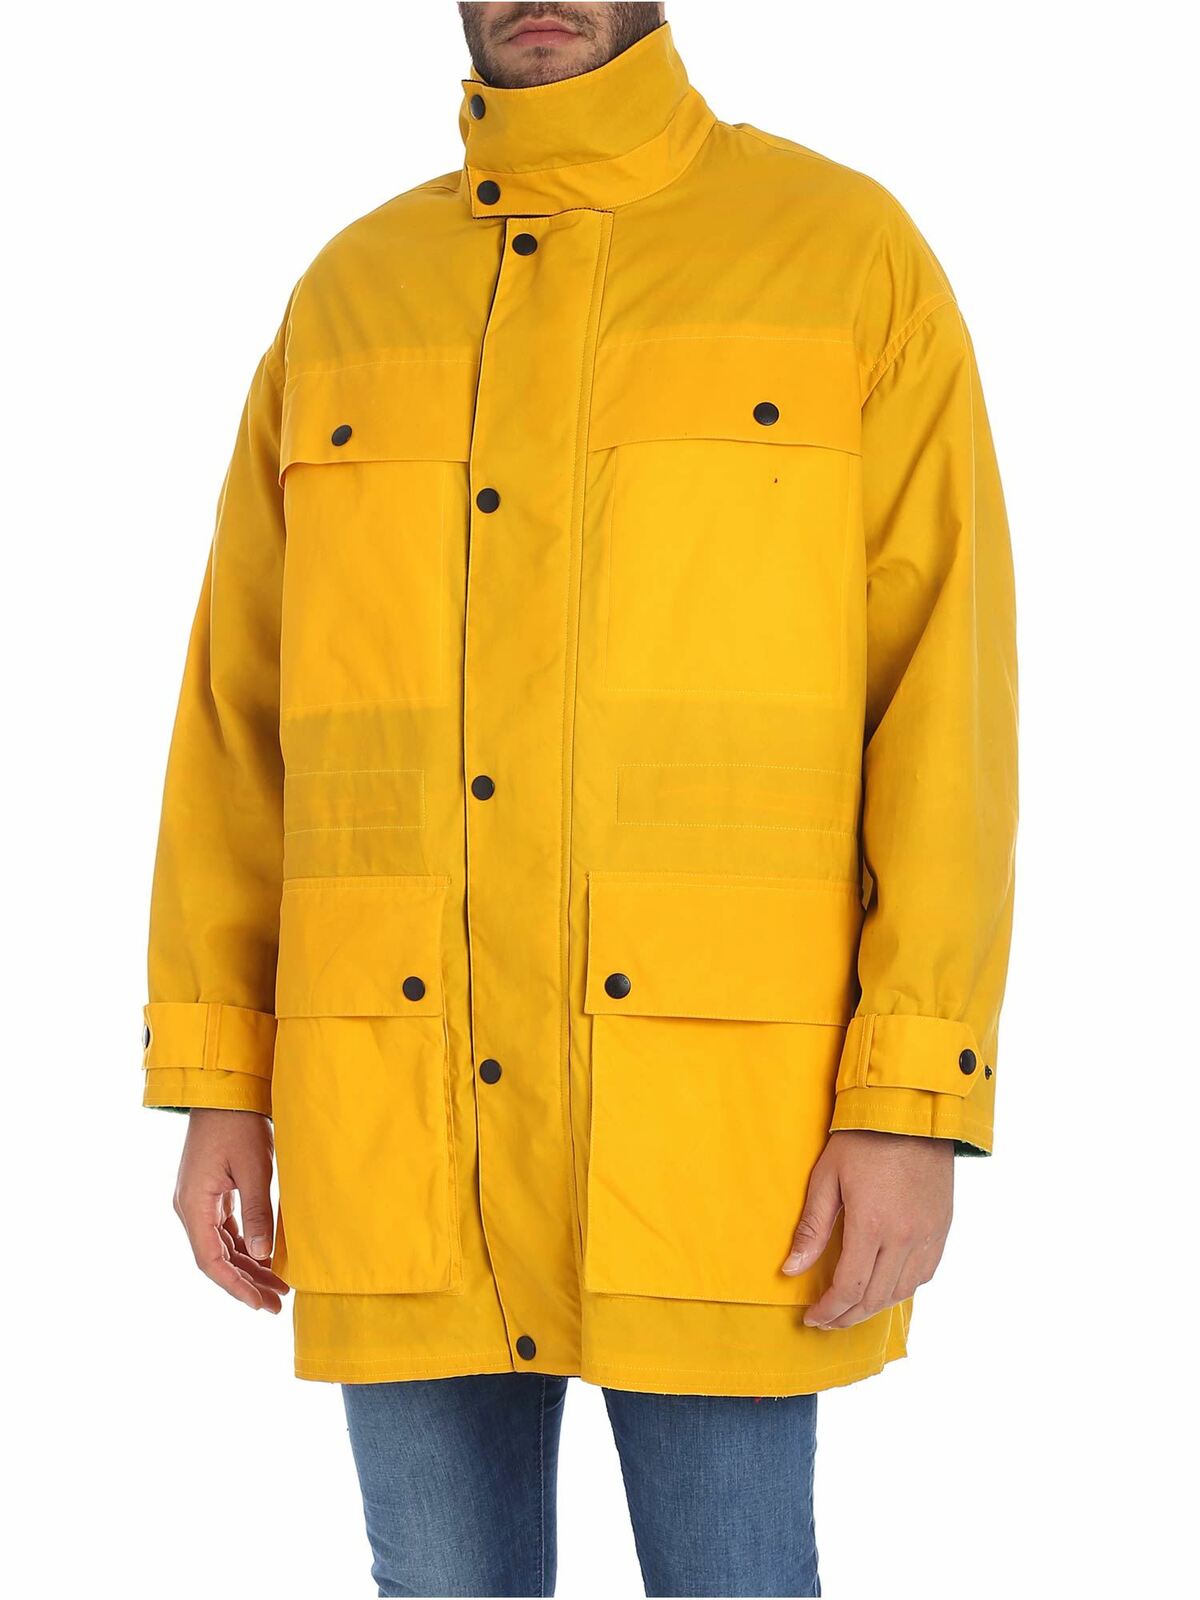 Knee length coats Kenzo - Yellow fabric coat - 5OU2051MH39 | iKRIX.com